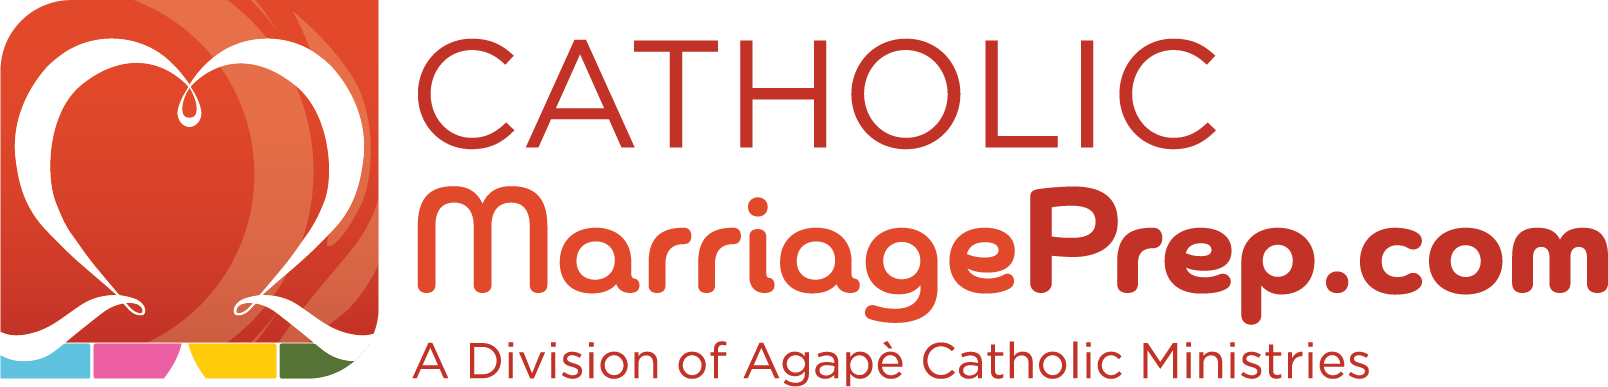 Catholic Marriage Prep